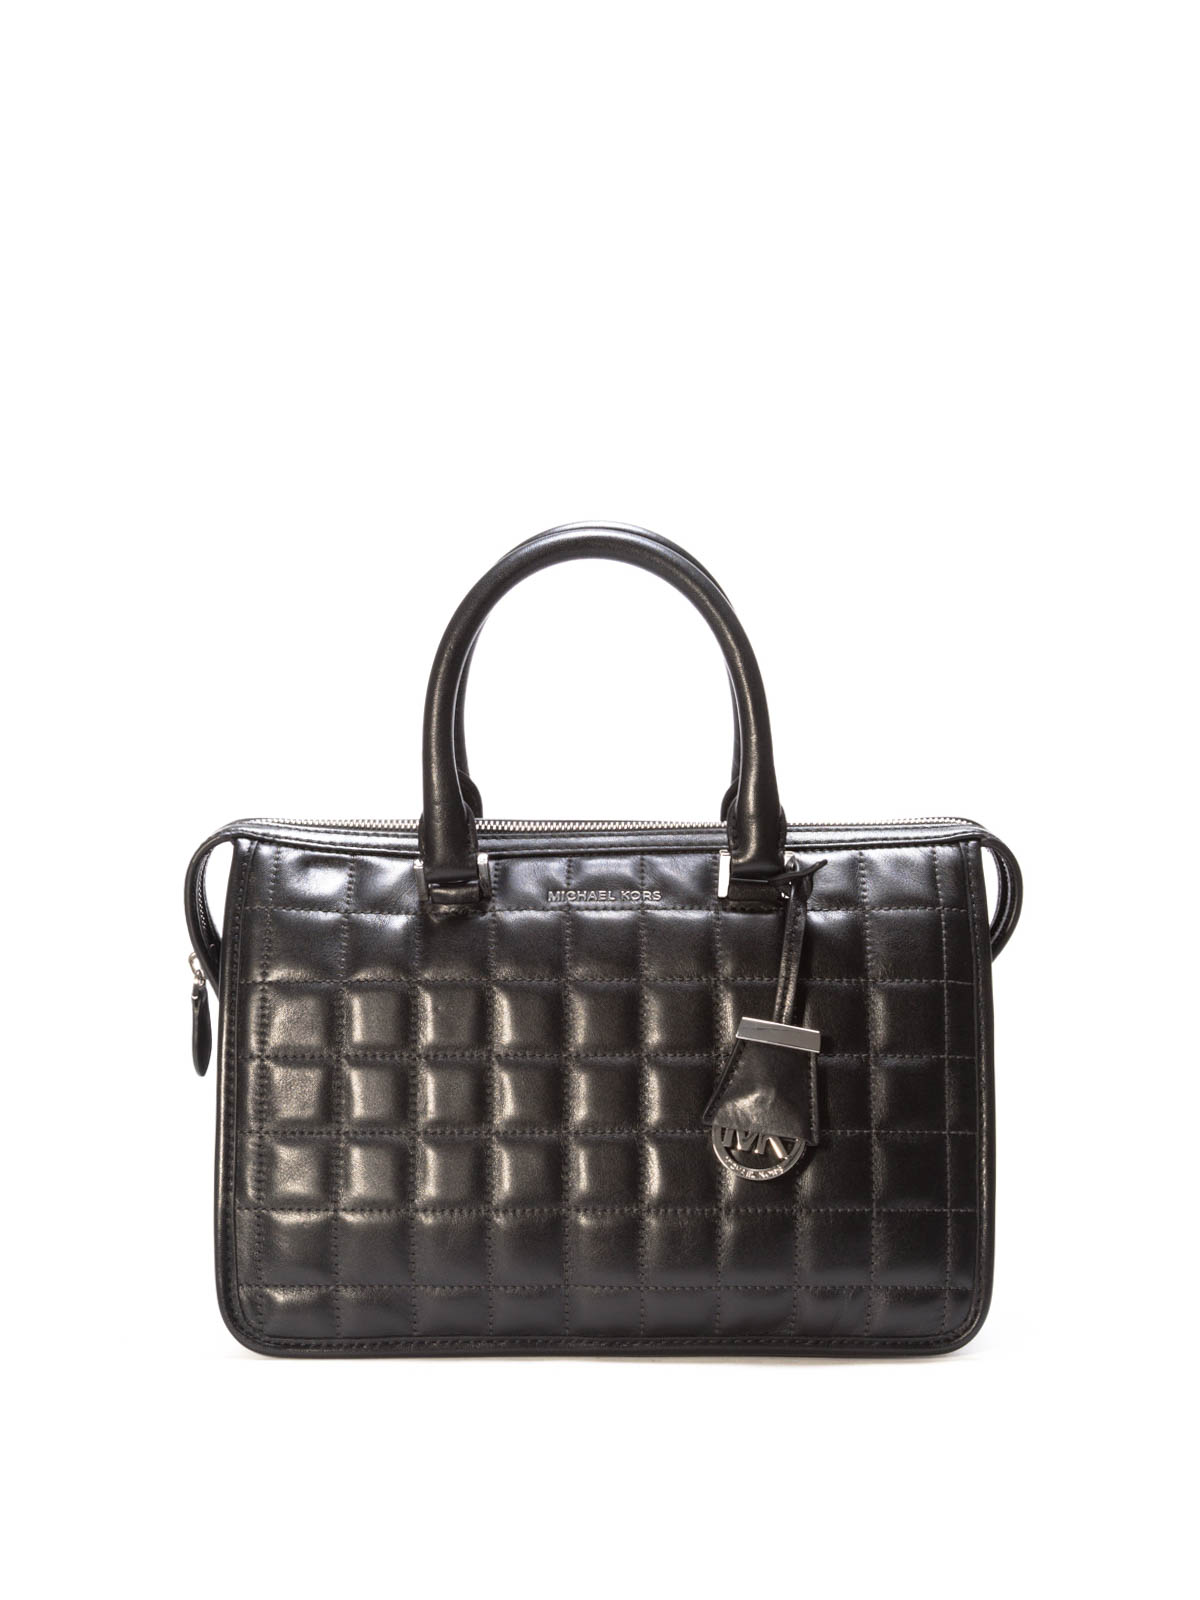 Michael Kors Williamsburg women's bag in grained leather Black